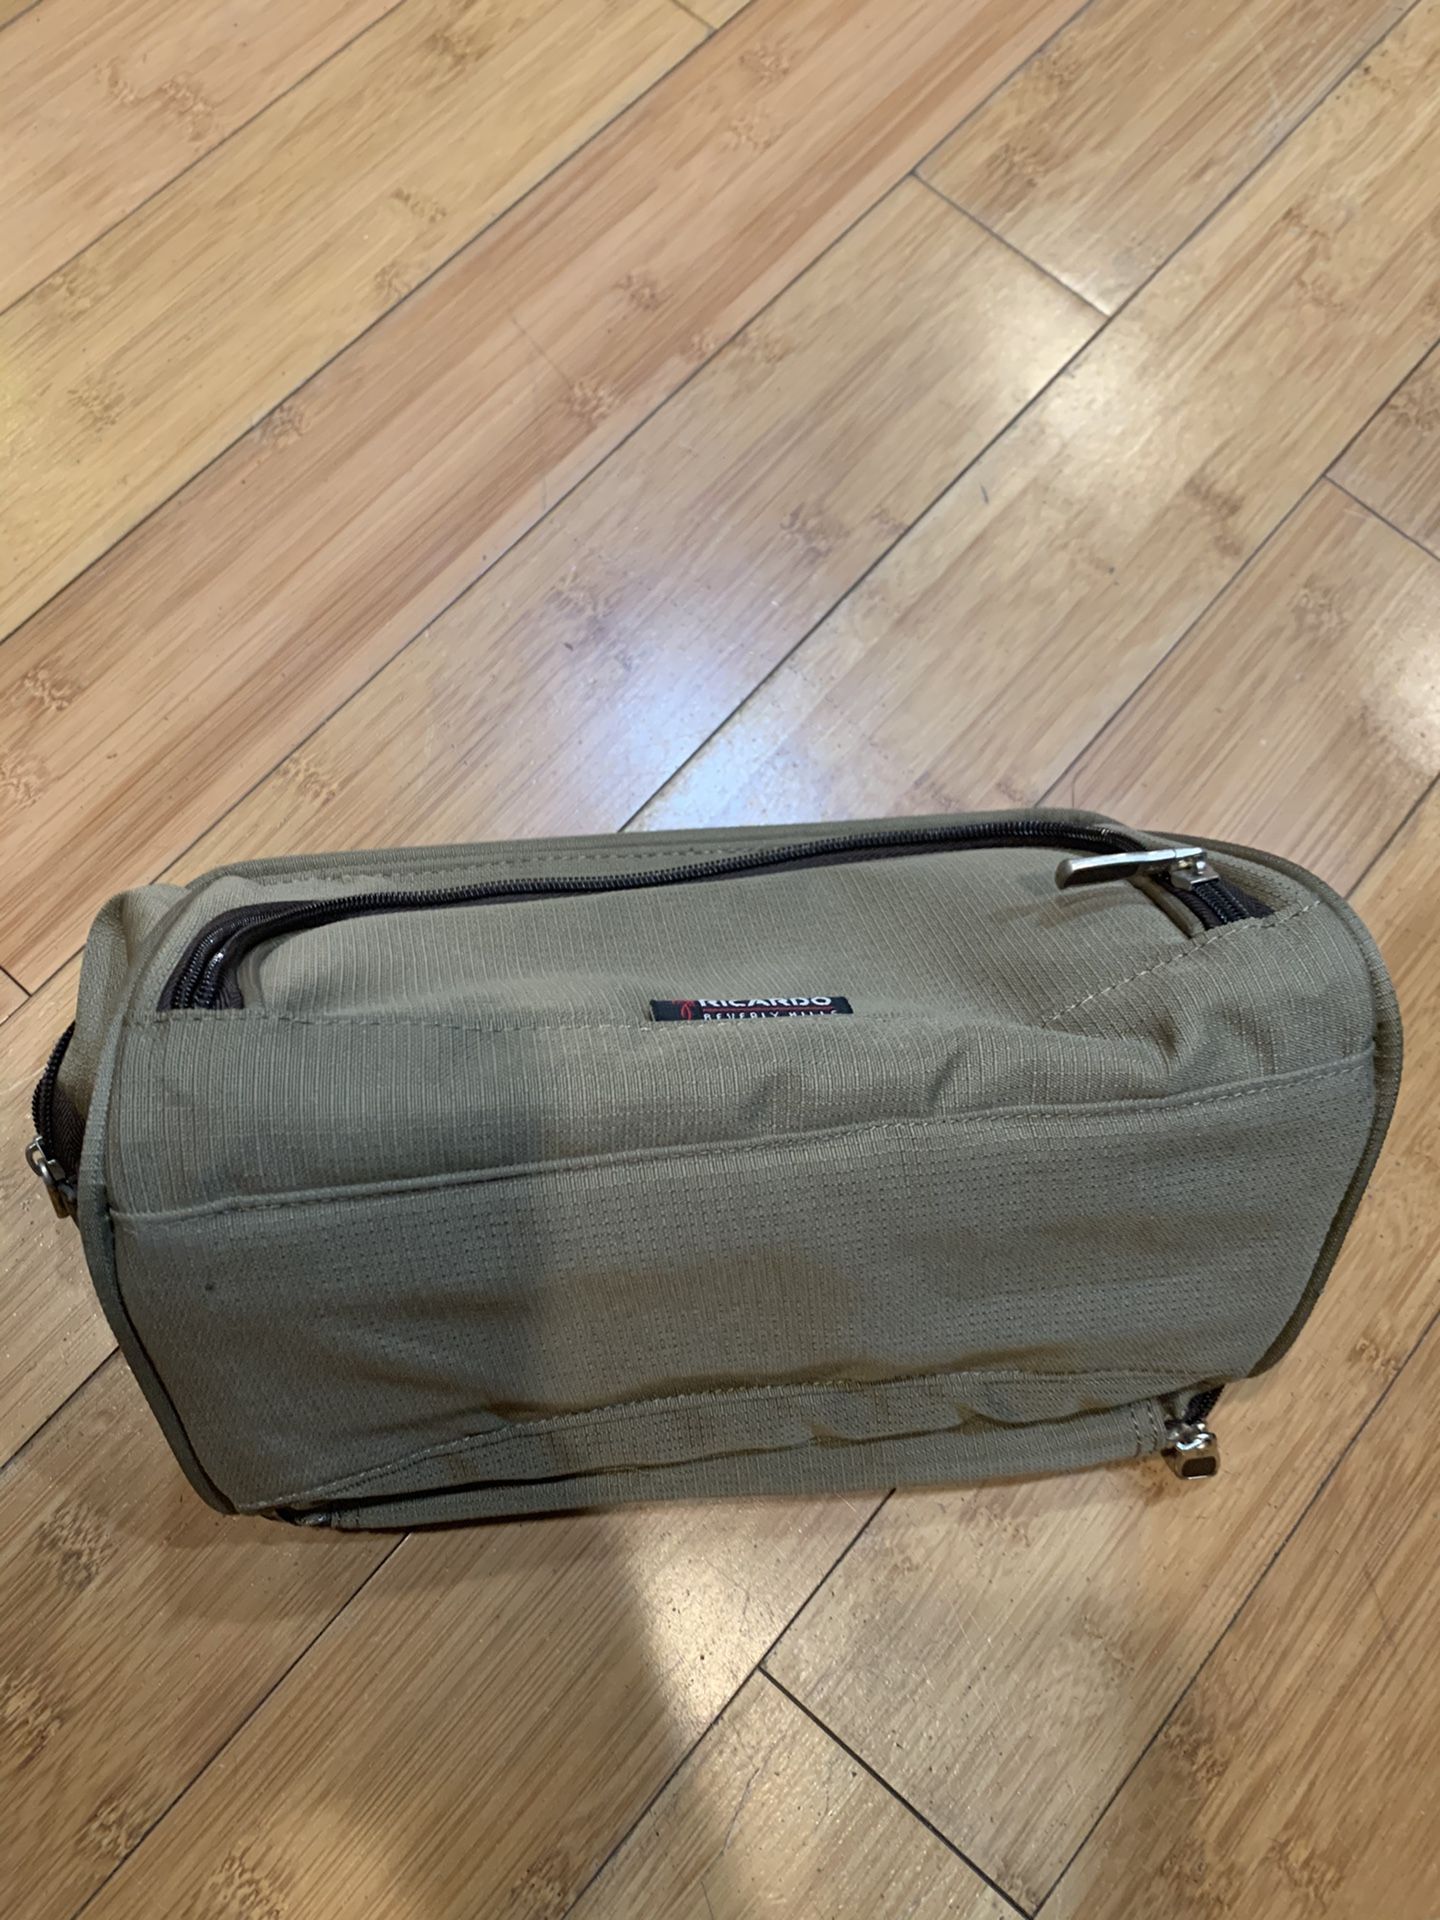 Essential bag. Brand new Size 10” x 7” x 7”.